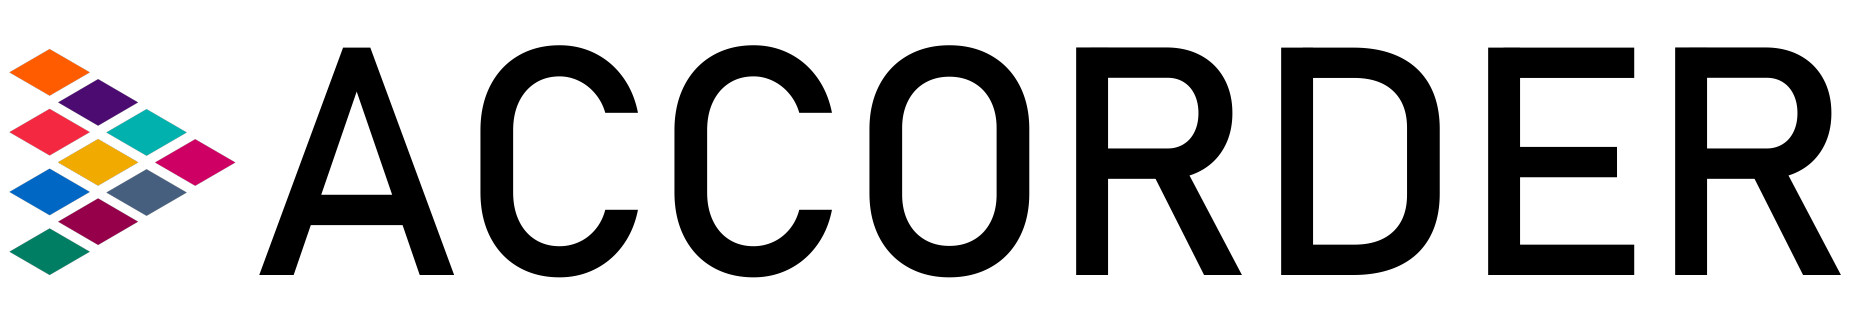 ACCORDER_Logo.jpg